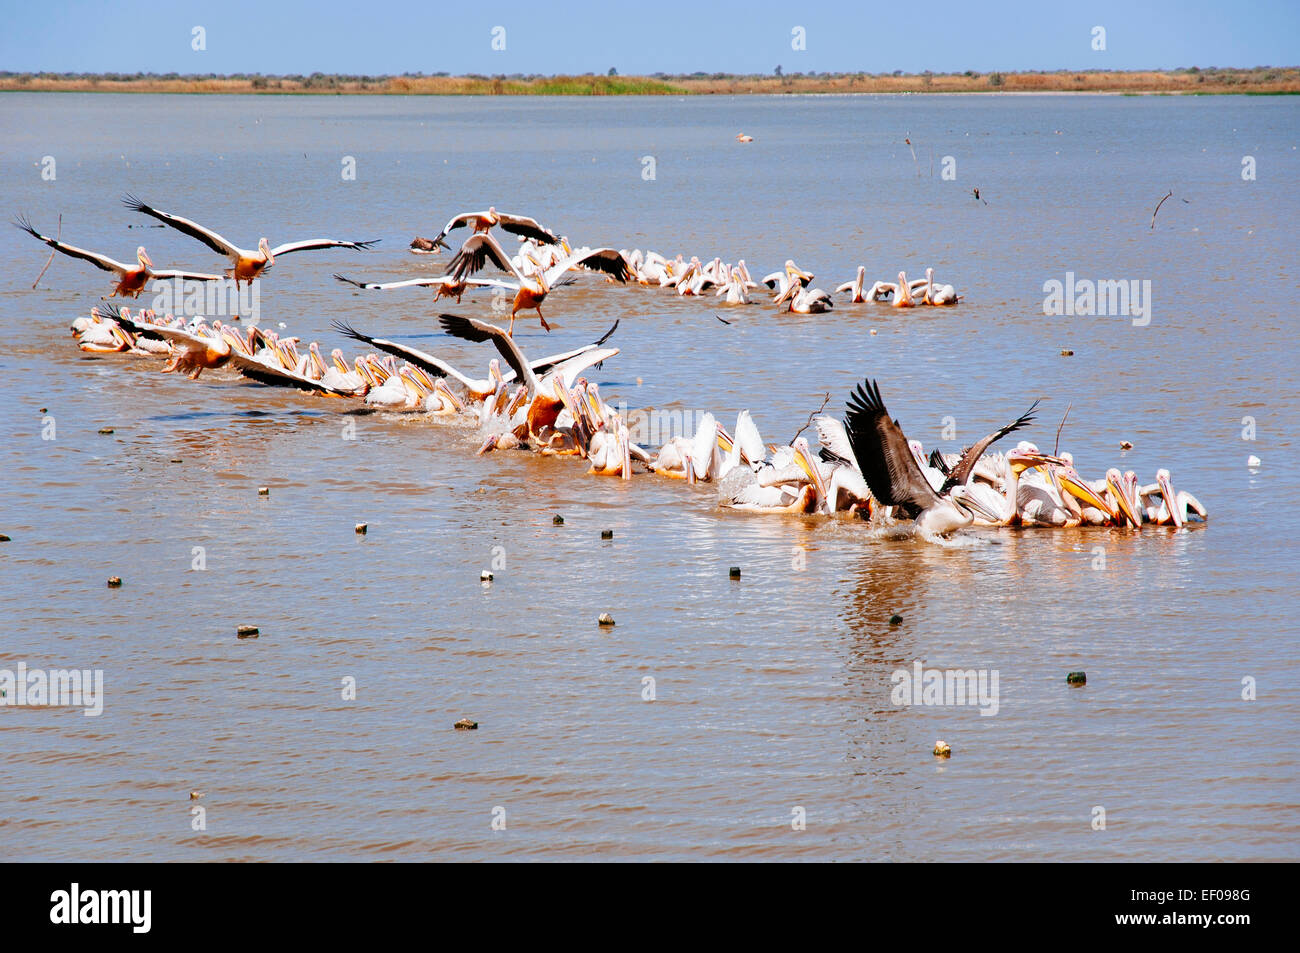 Pelicans in Oiseaux de Djoudj National Park, Mauritania. Stock Photo